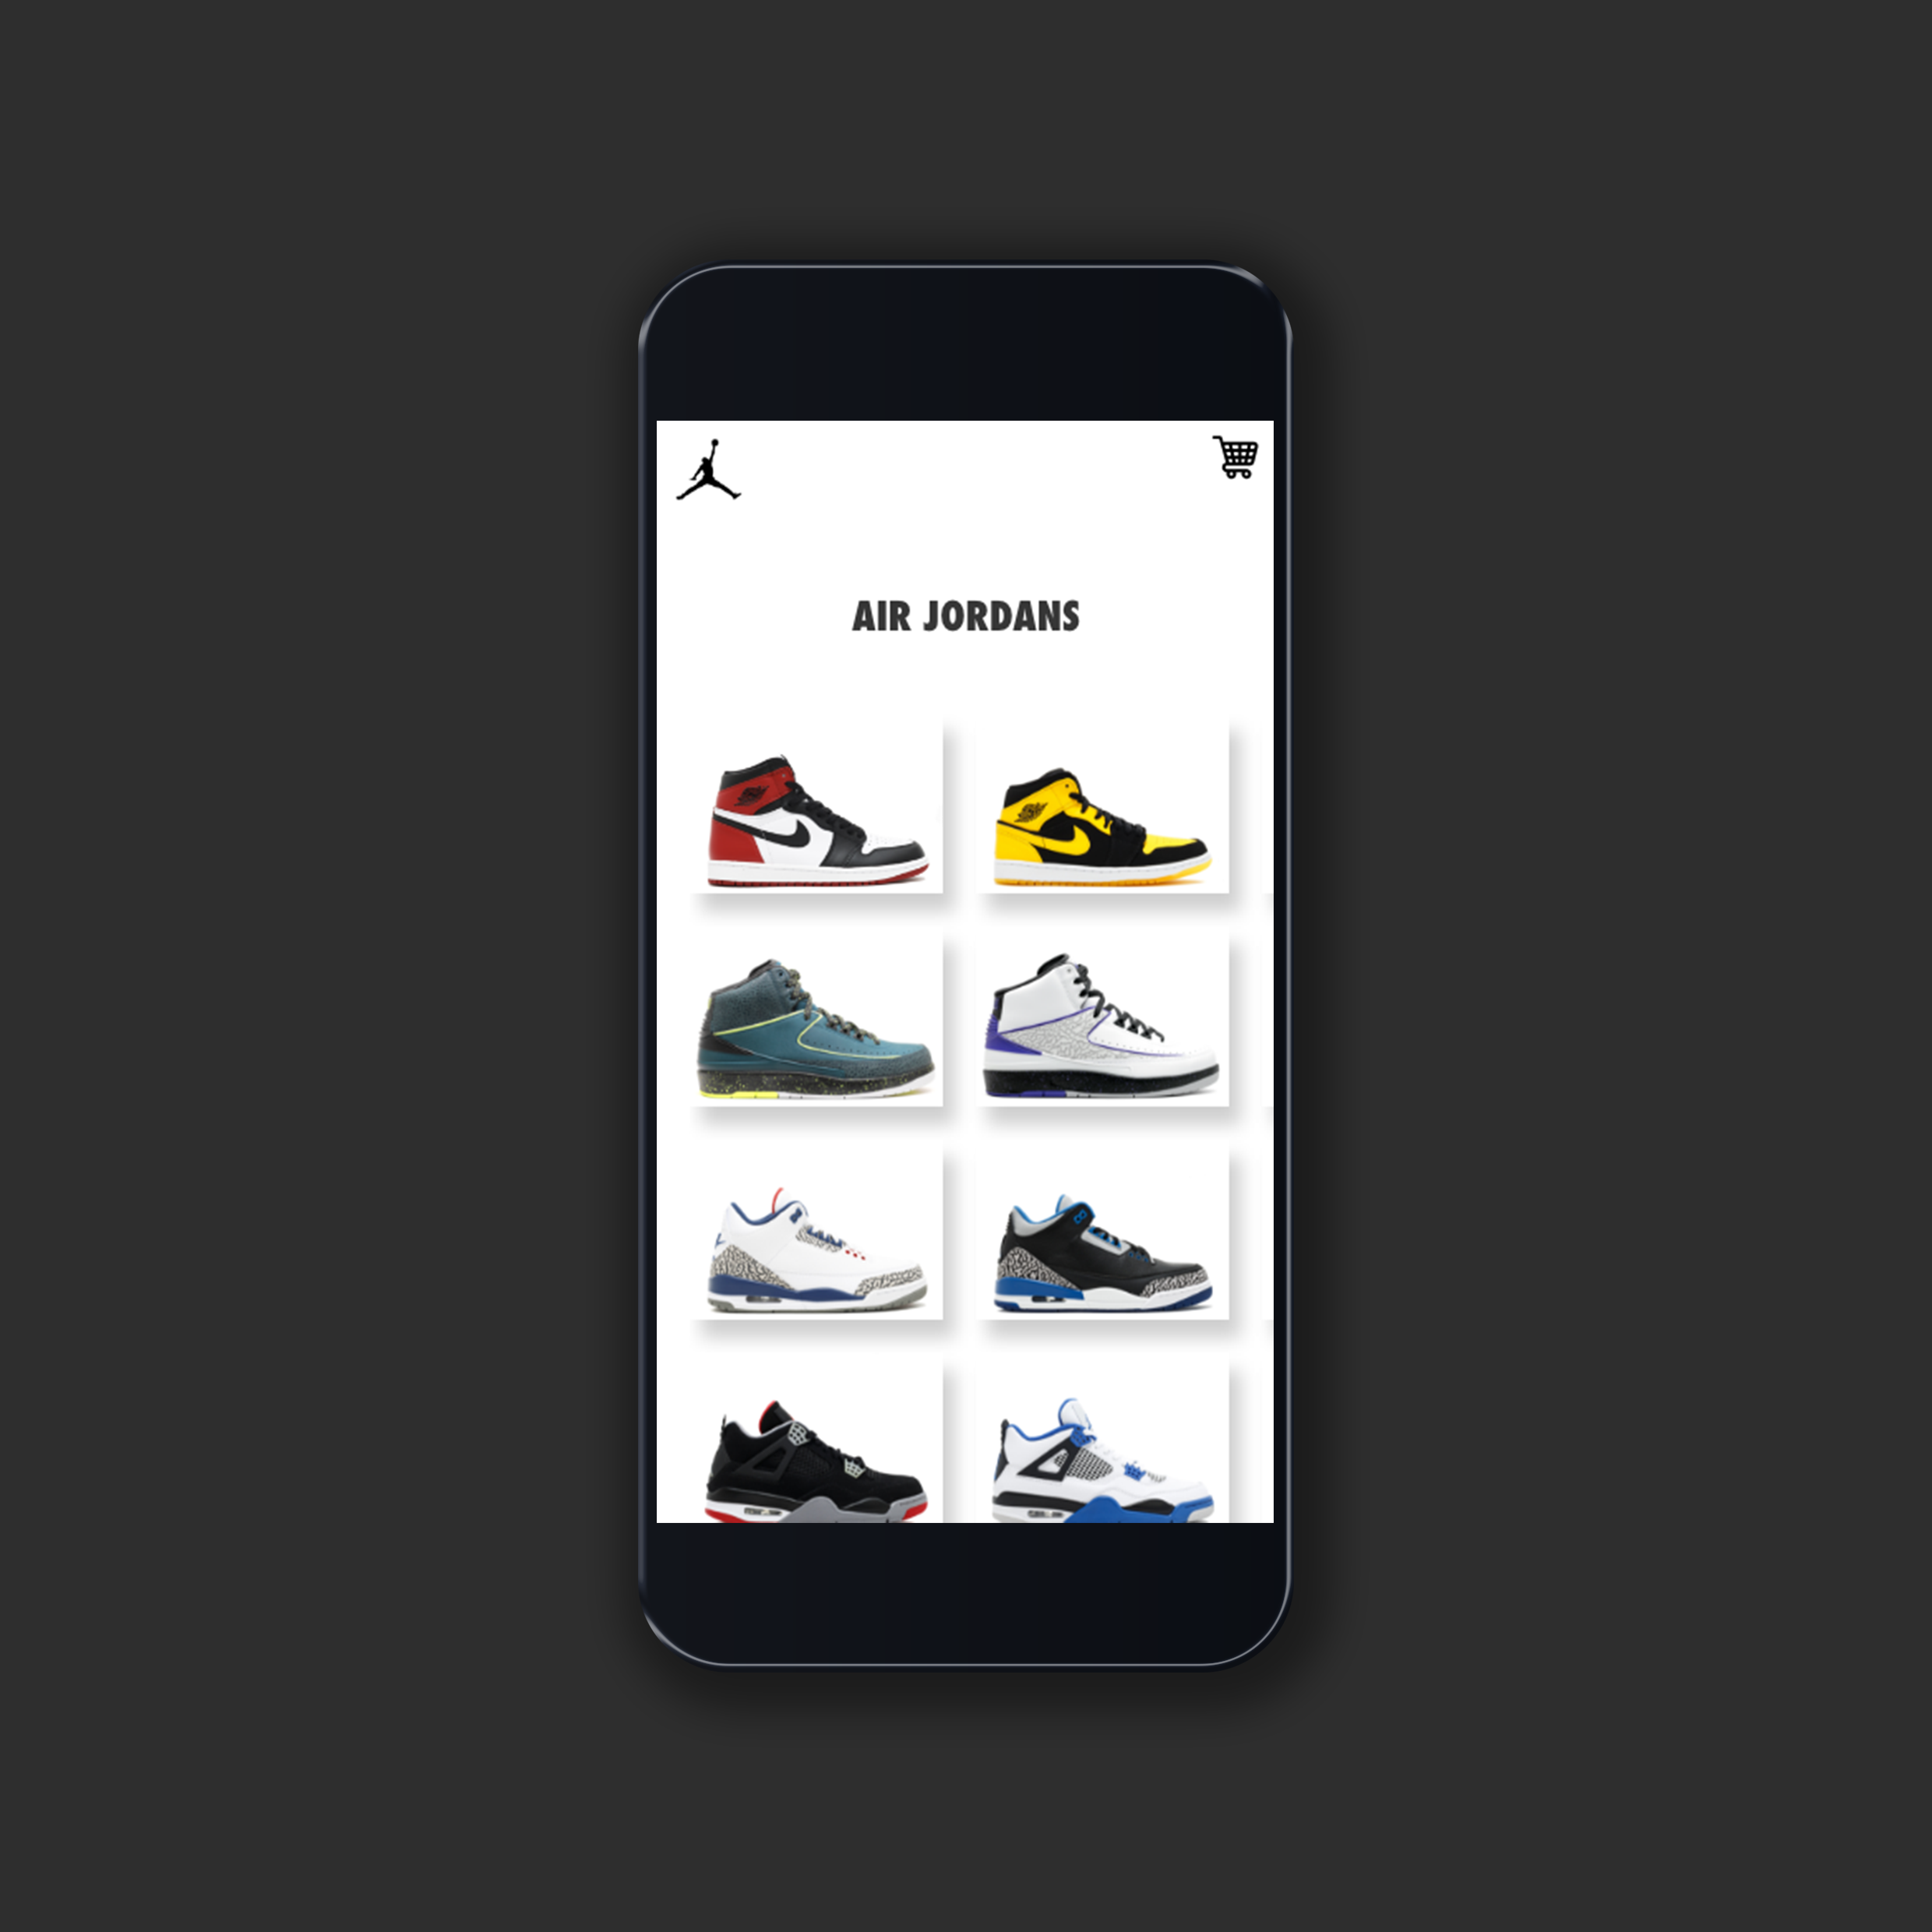 Air Jordan Mobile App by Stephanie Post on Dribbble